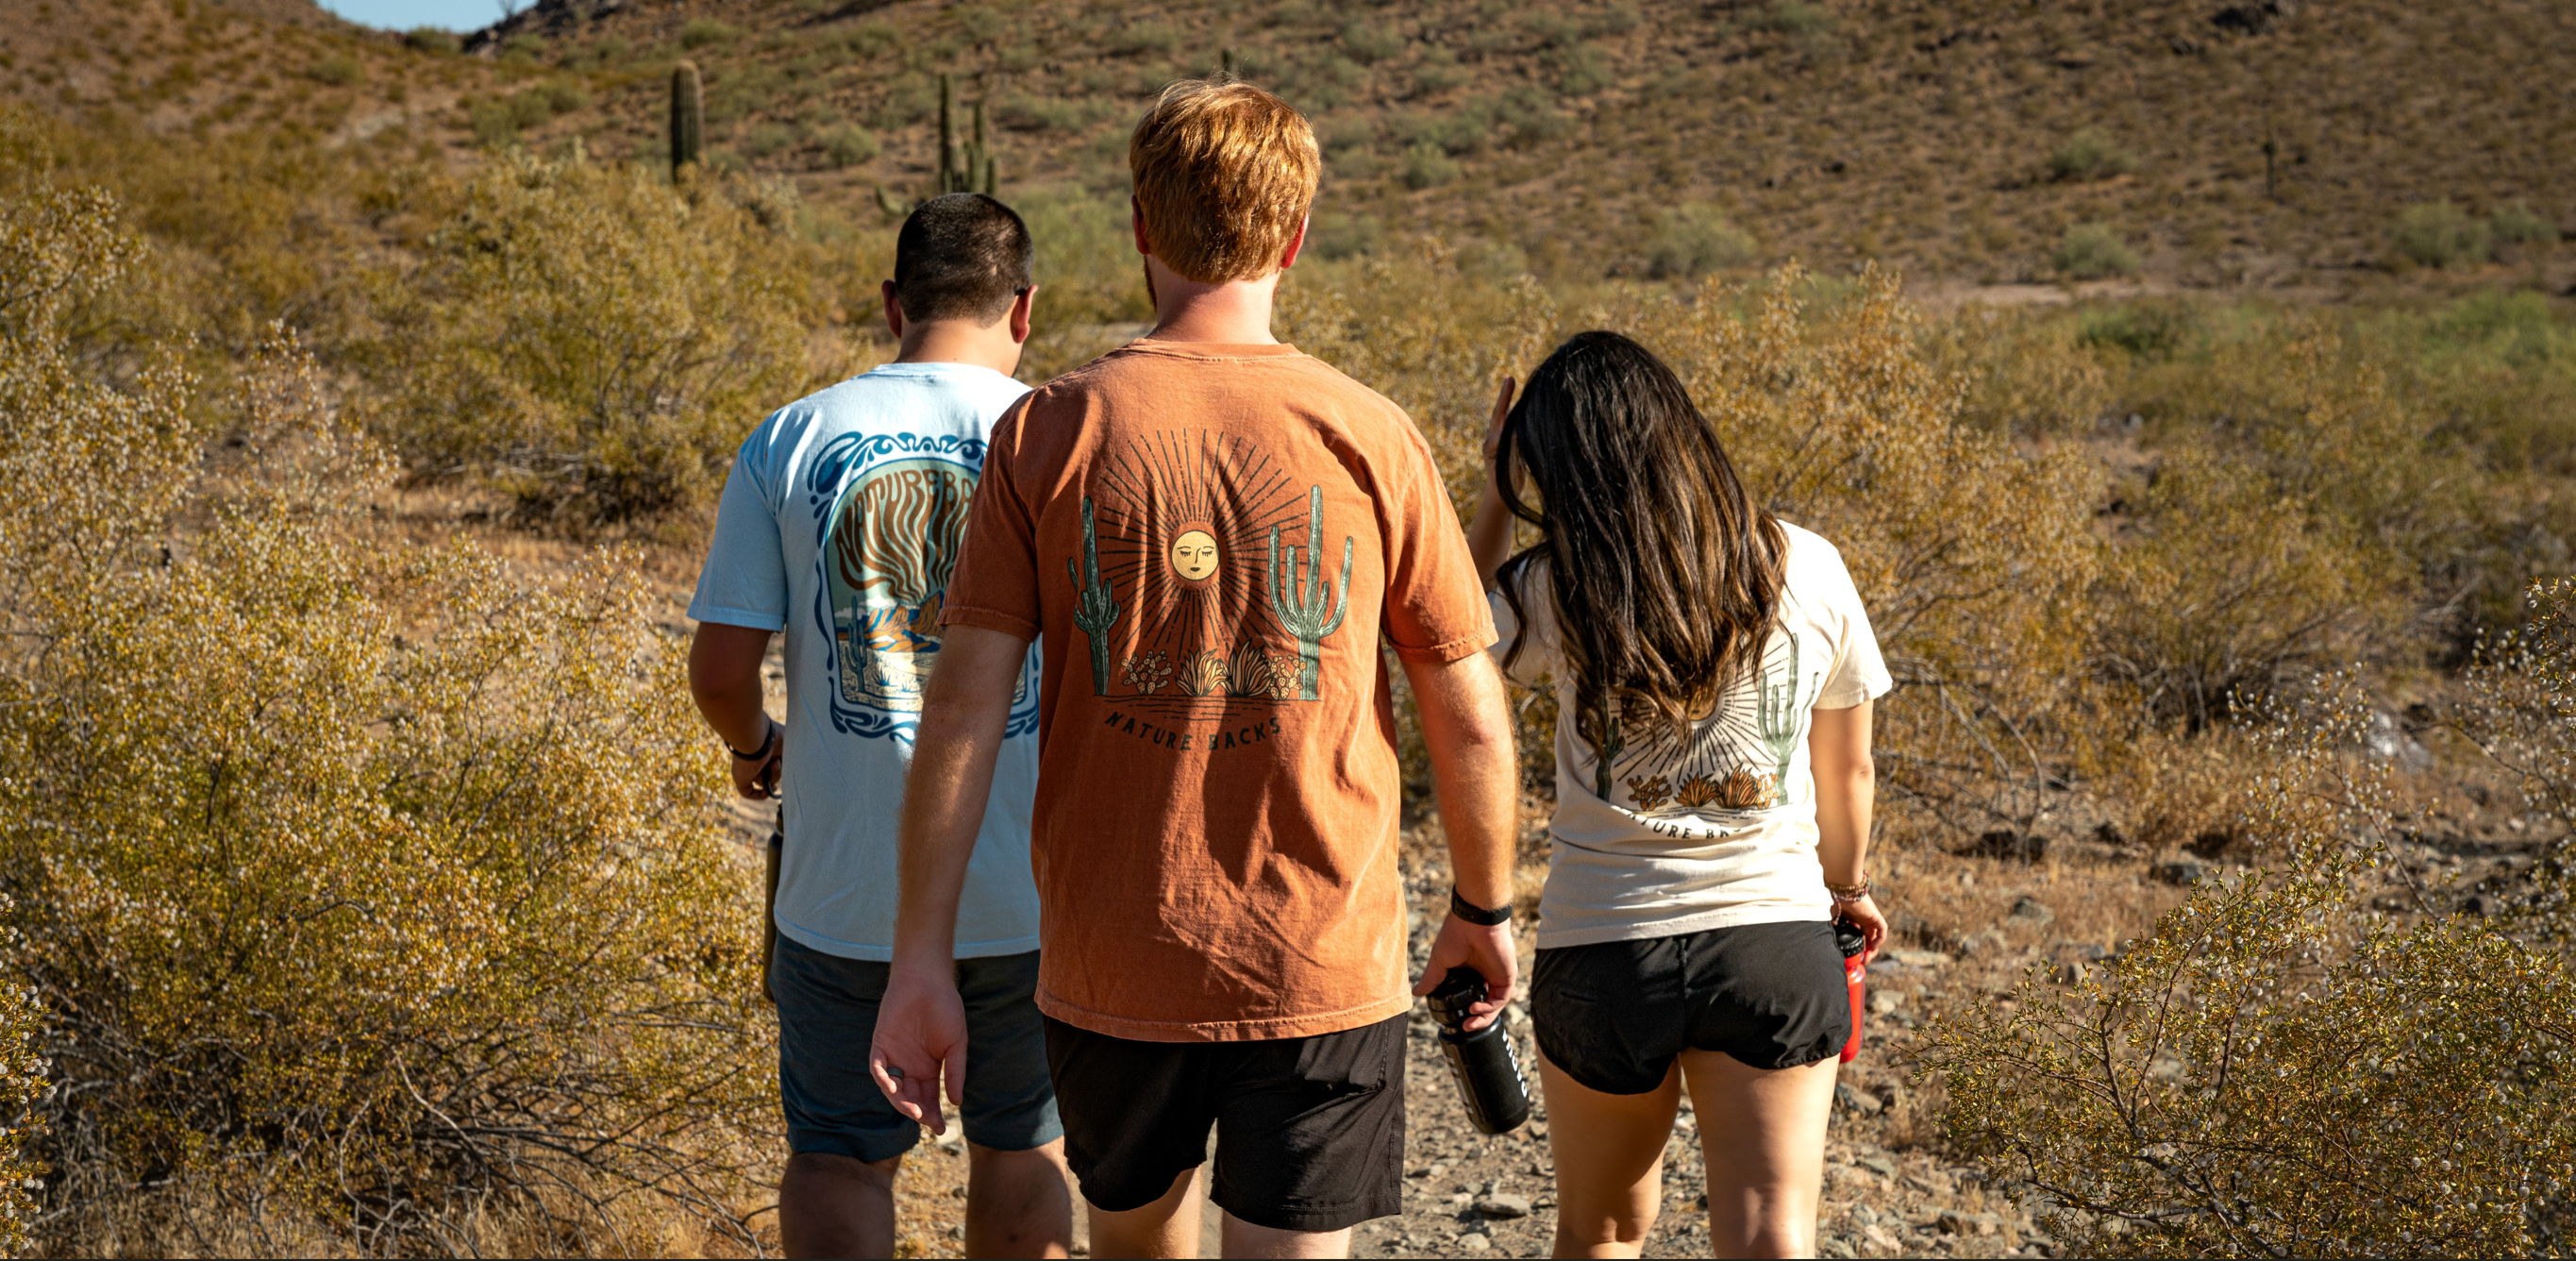 Group Of People Walking Through The Desert